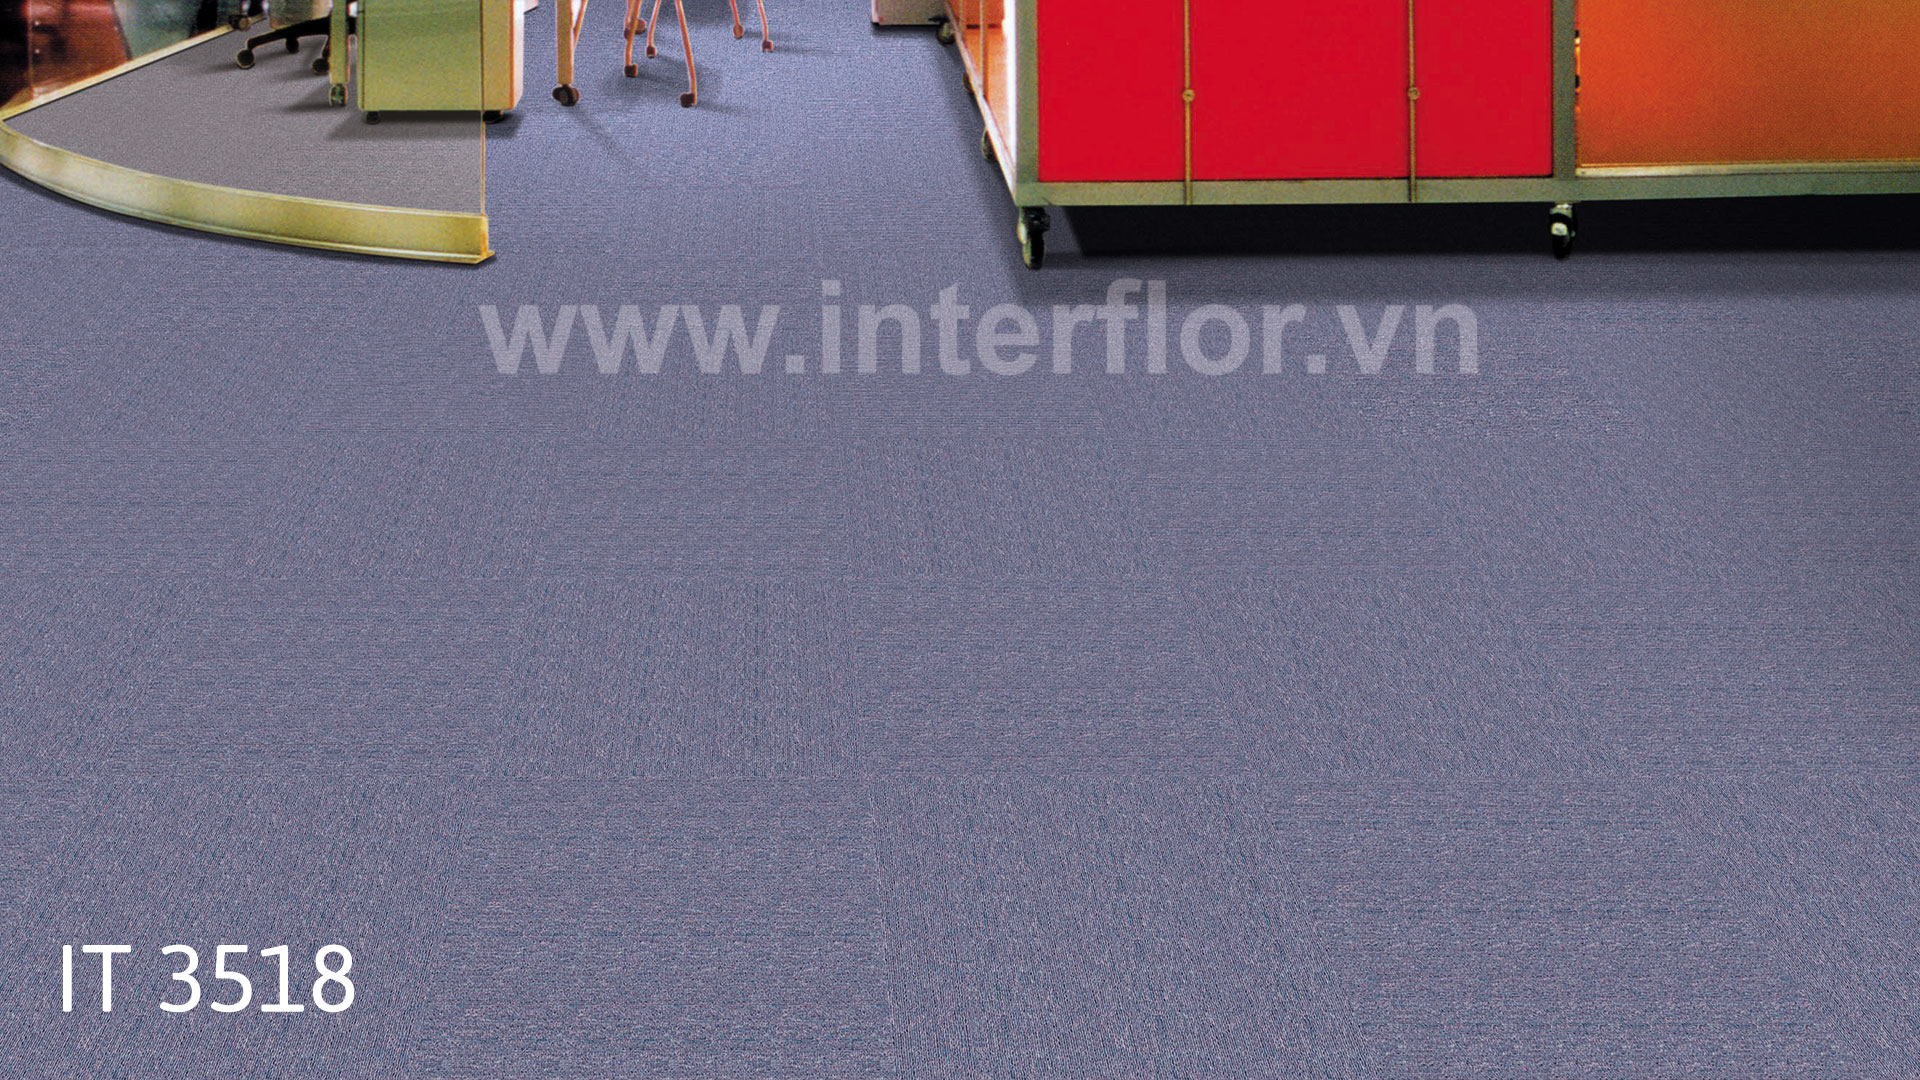 Interflor IT3518